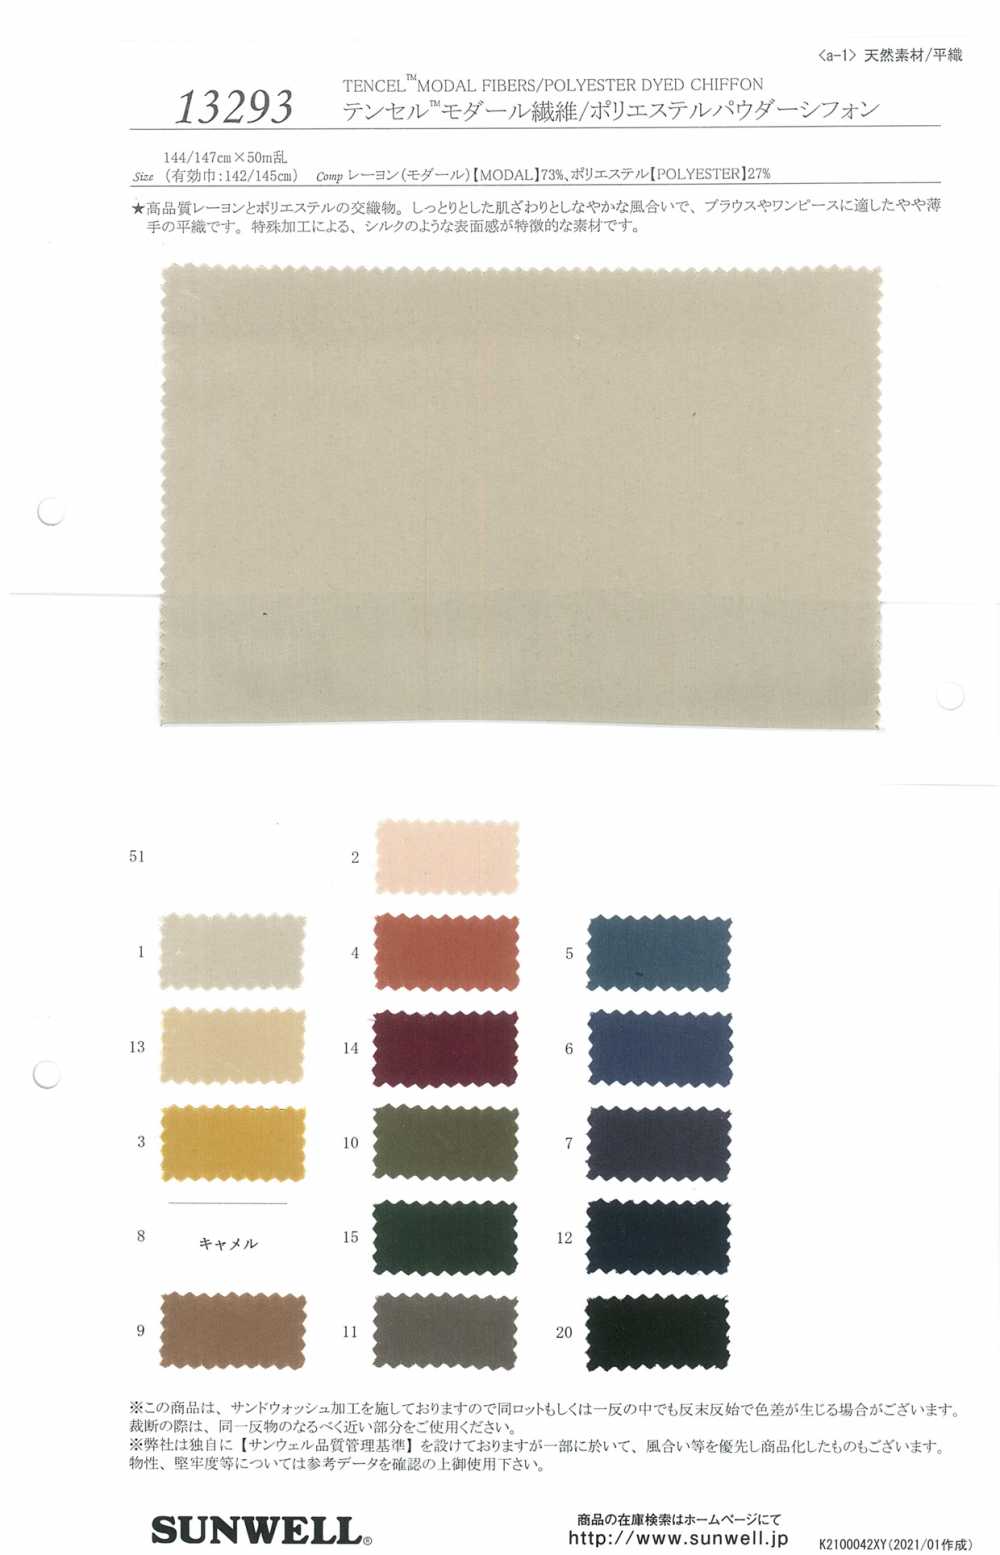 13293 Tencel (TM) Modal Fiber / Polyester Powder Chiffon[Textile / Fabric] SUNWELL